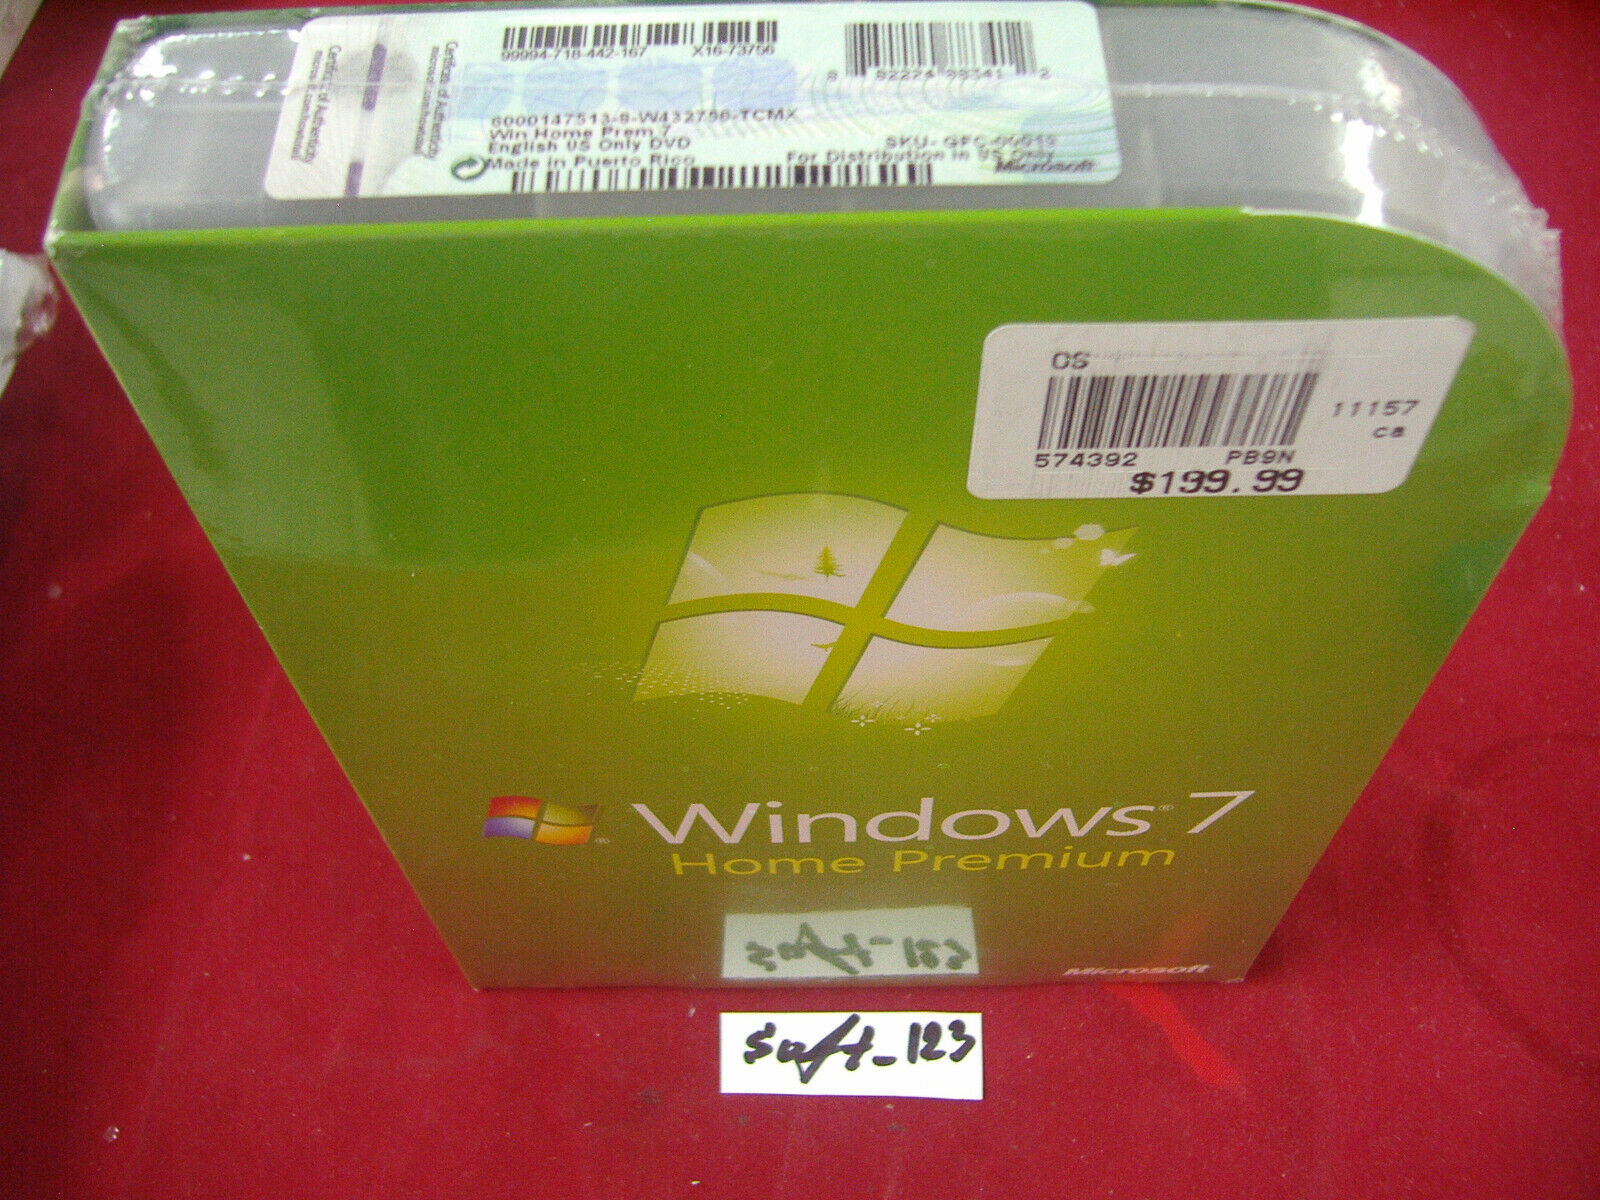 Microsoft Windows 7 Home Premium Full English 32 & 64 Bit DVDs =NEW SEALED BOX=